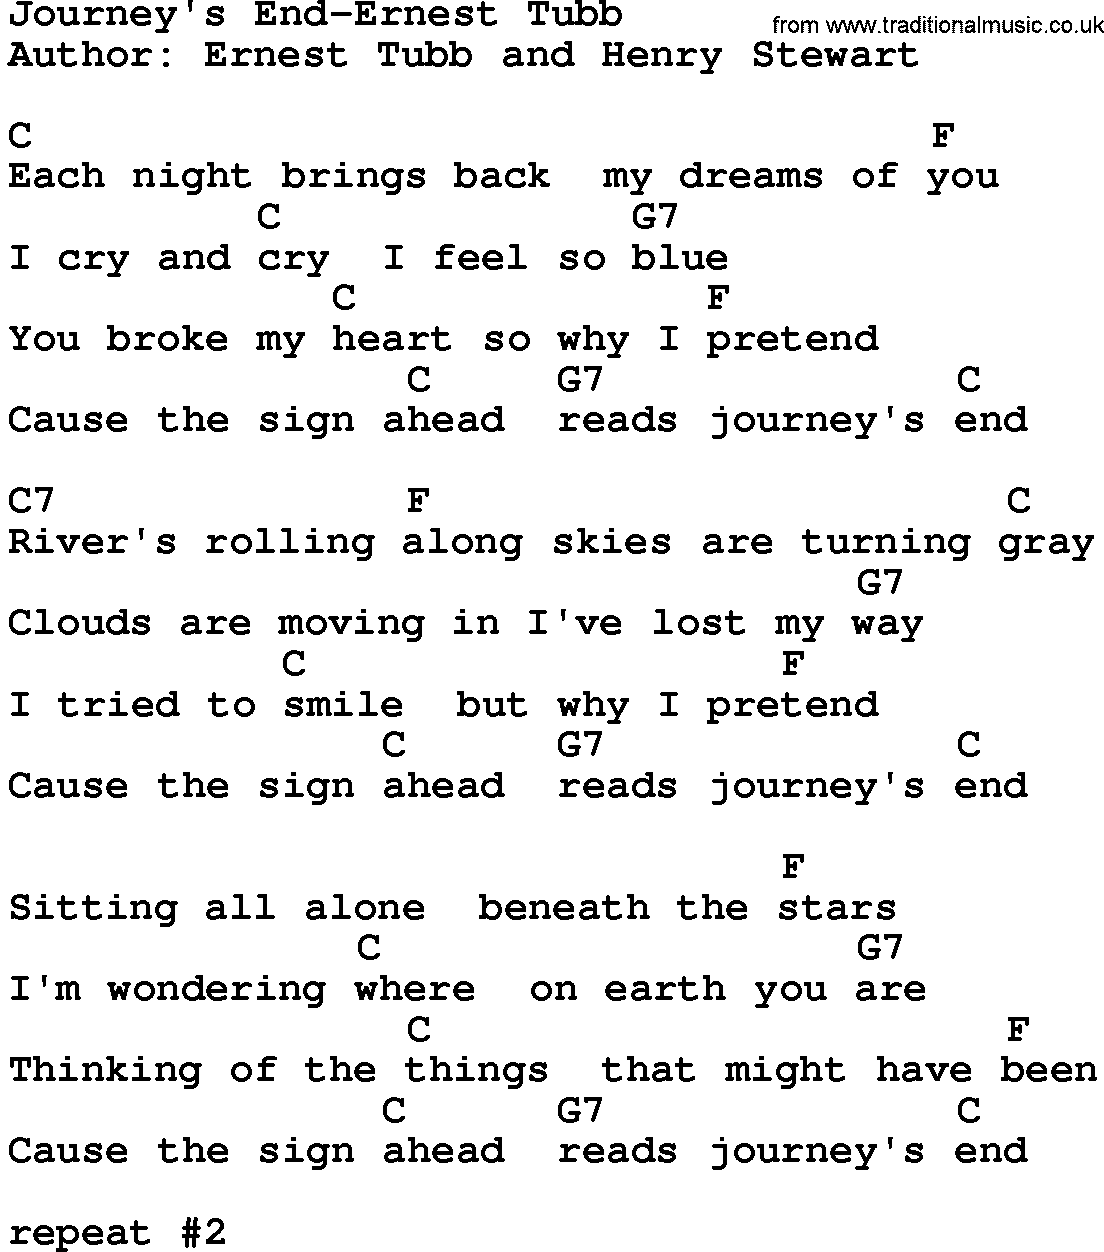 journey lyrics with chords